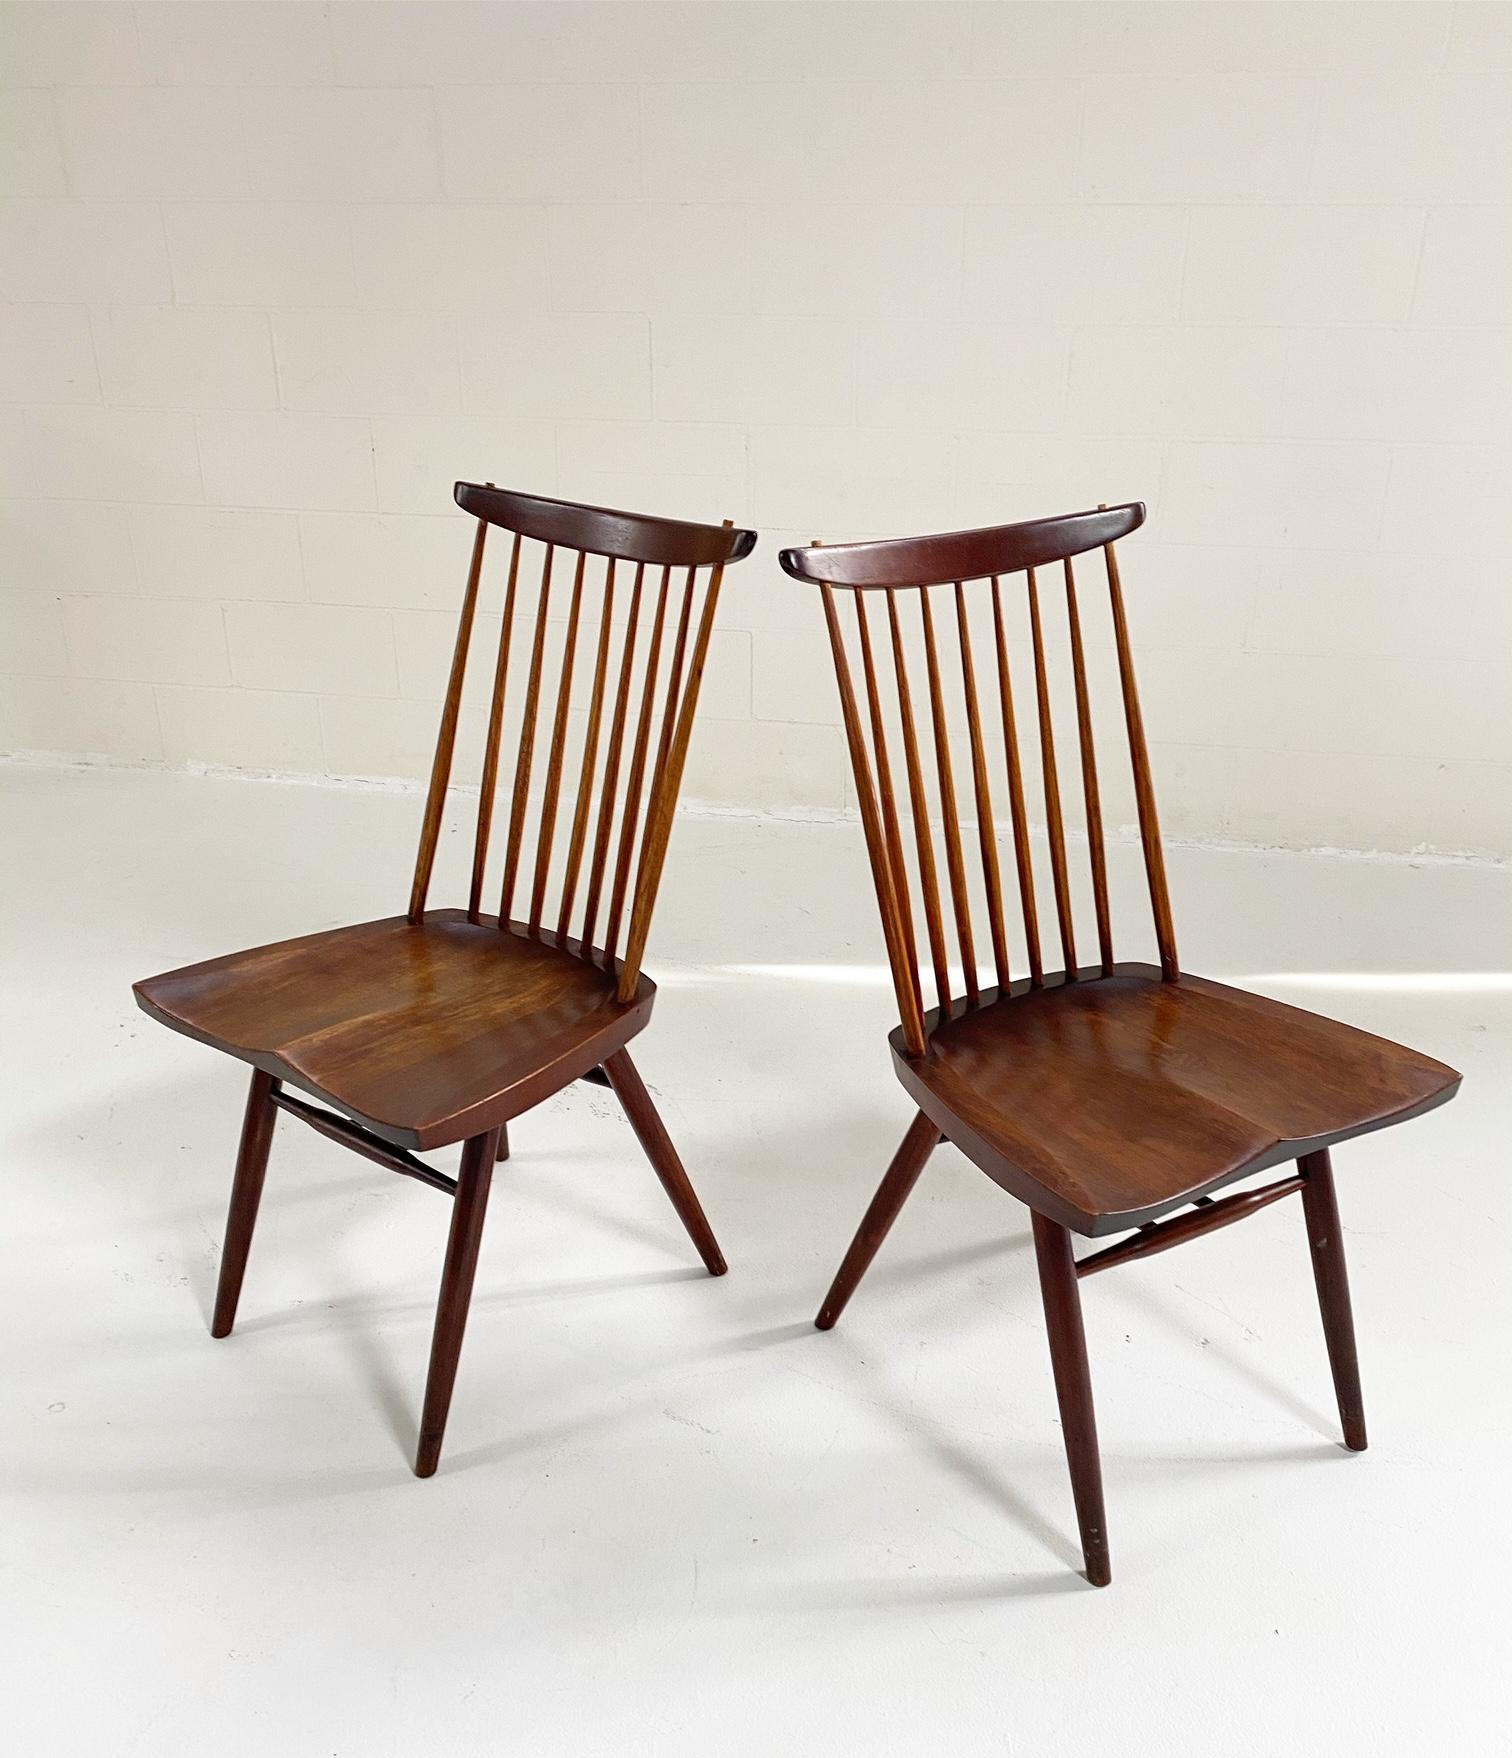 American Craftsman George Nakashima New Chairs, Pair